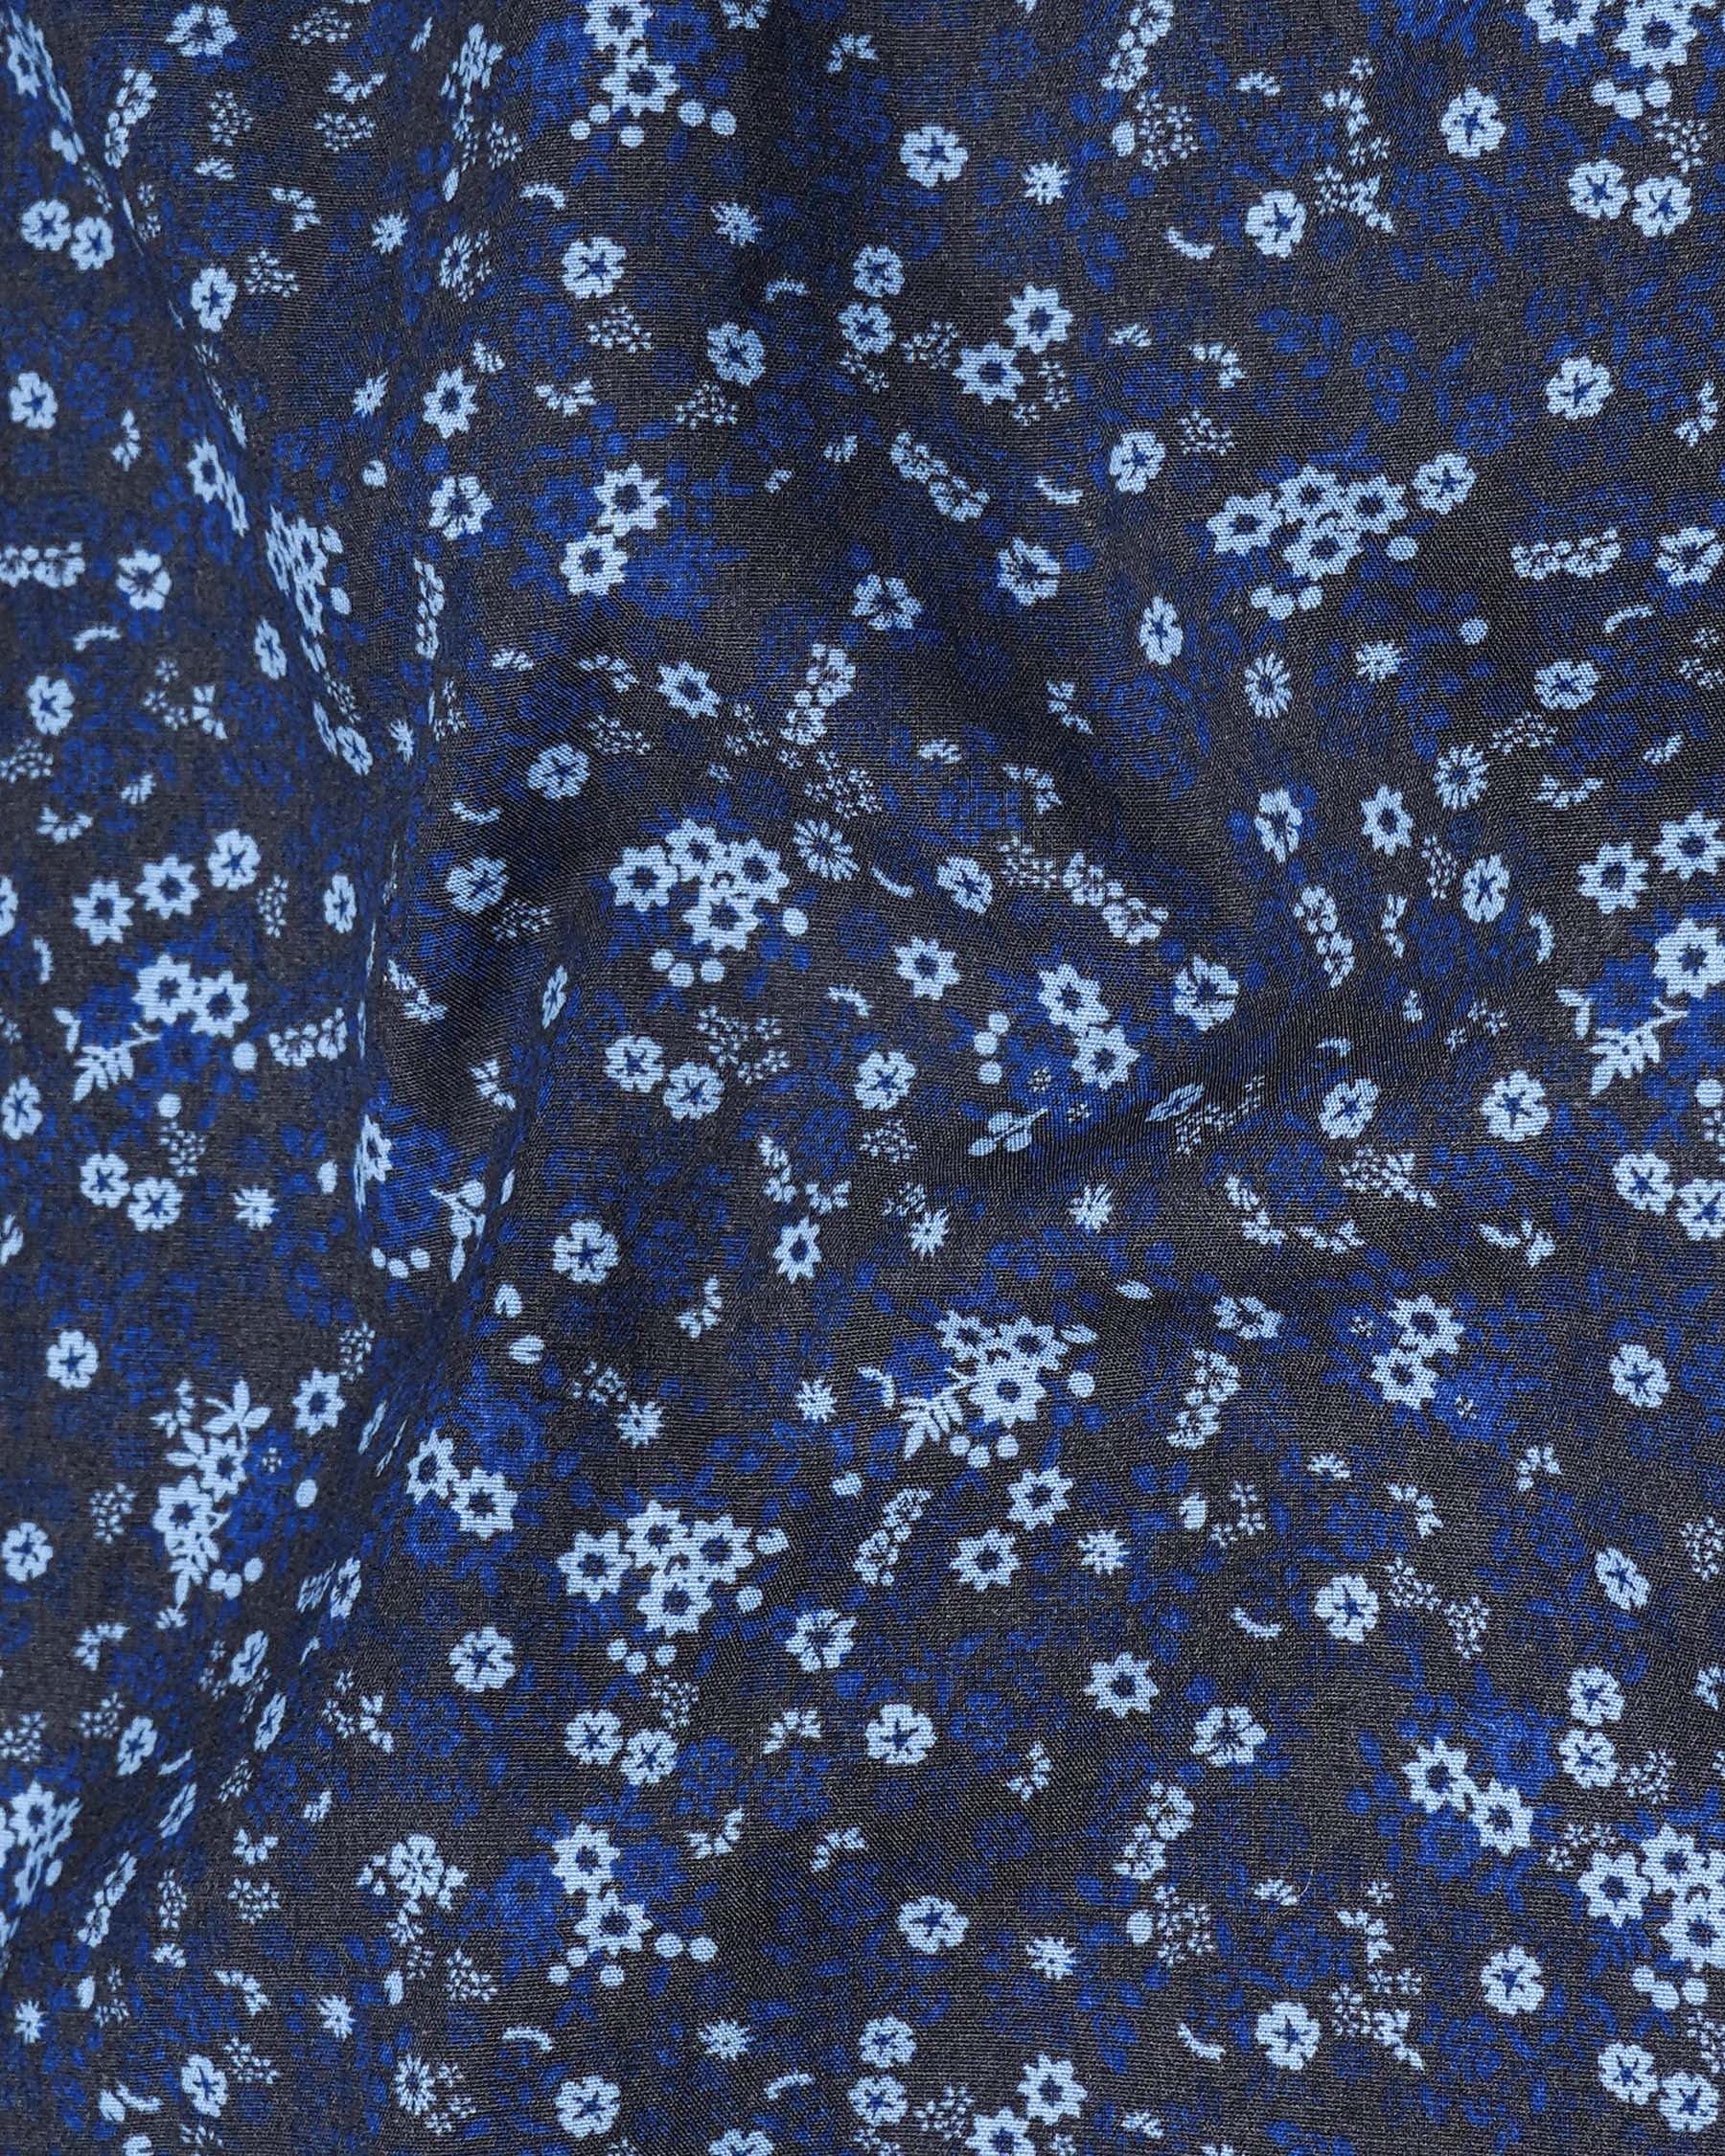 Zodiac Blue Ditzy Floral Printed Premium Cotton Shirt